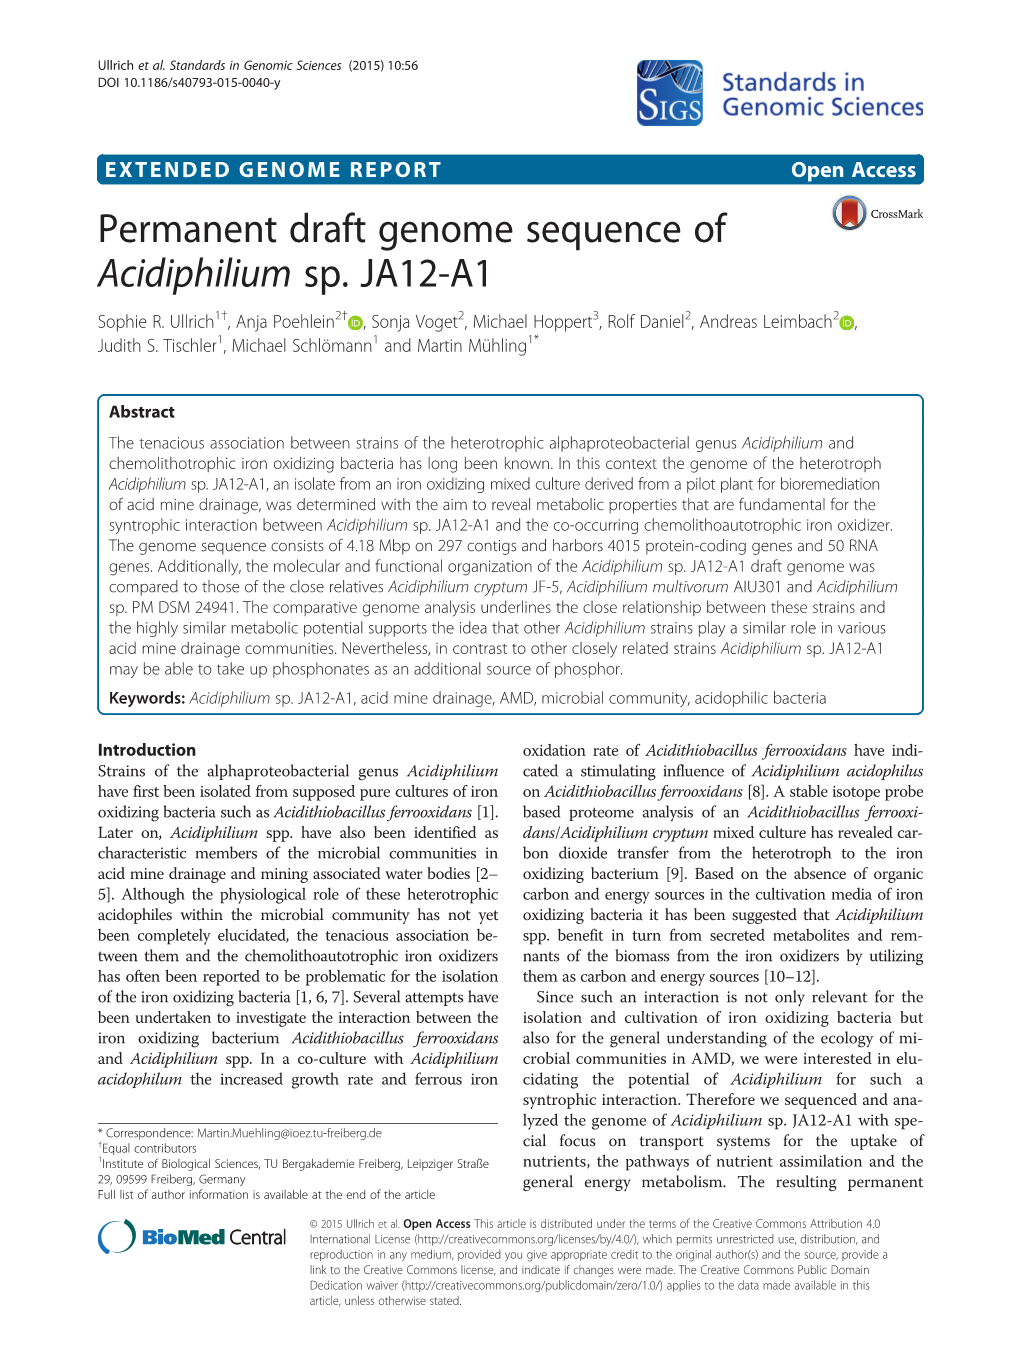 Permanent Draft Genome Sequence of Acidiphilium Sp. JA12-A1 Sophie R